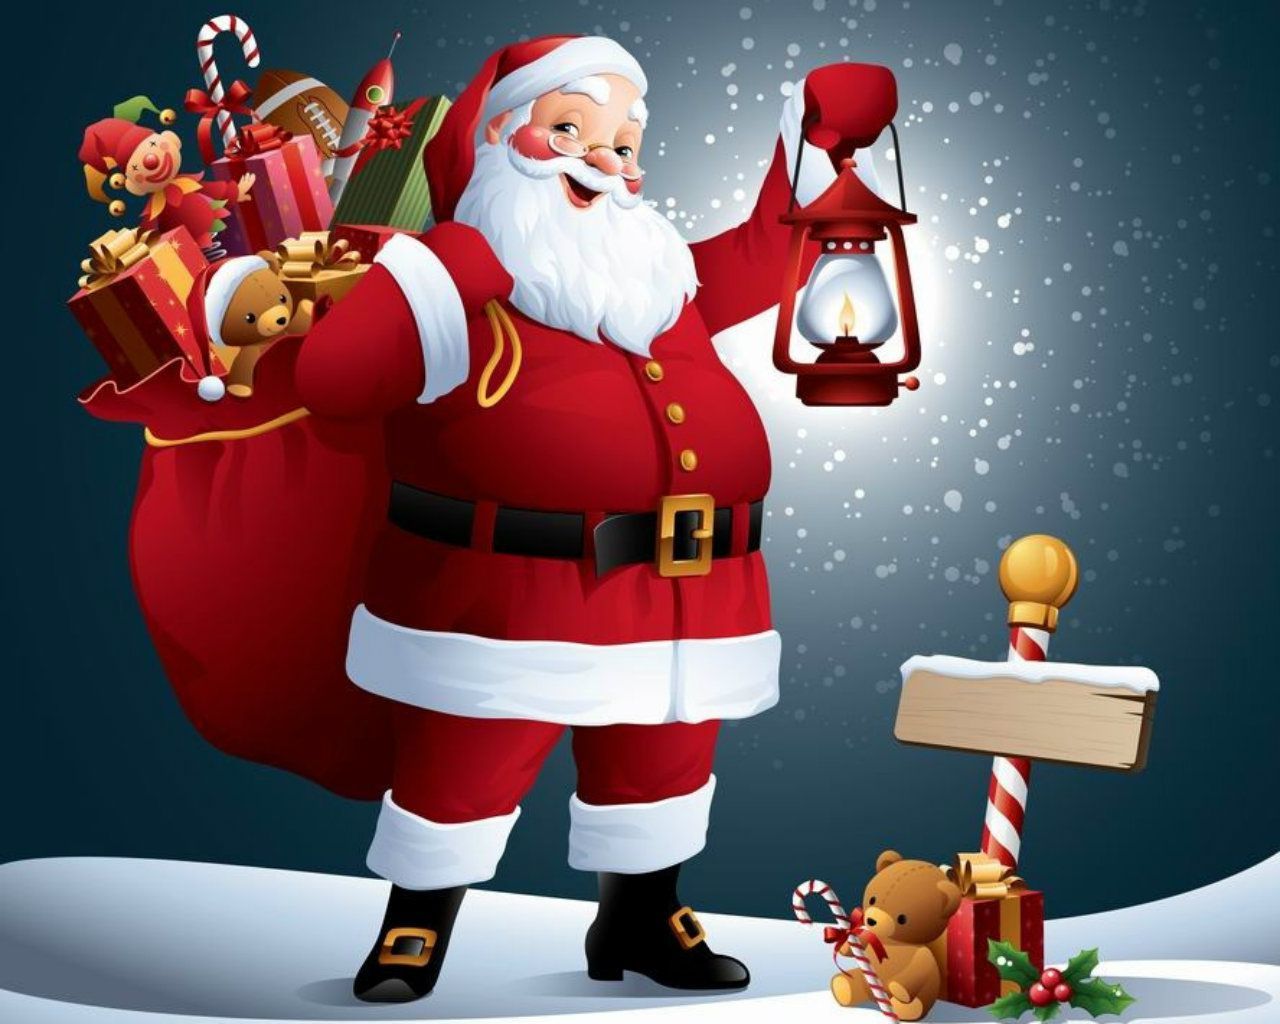 Animated Santa Claus Image Merry Christmas